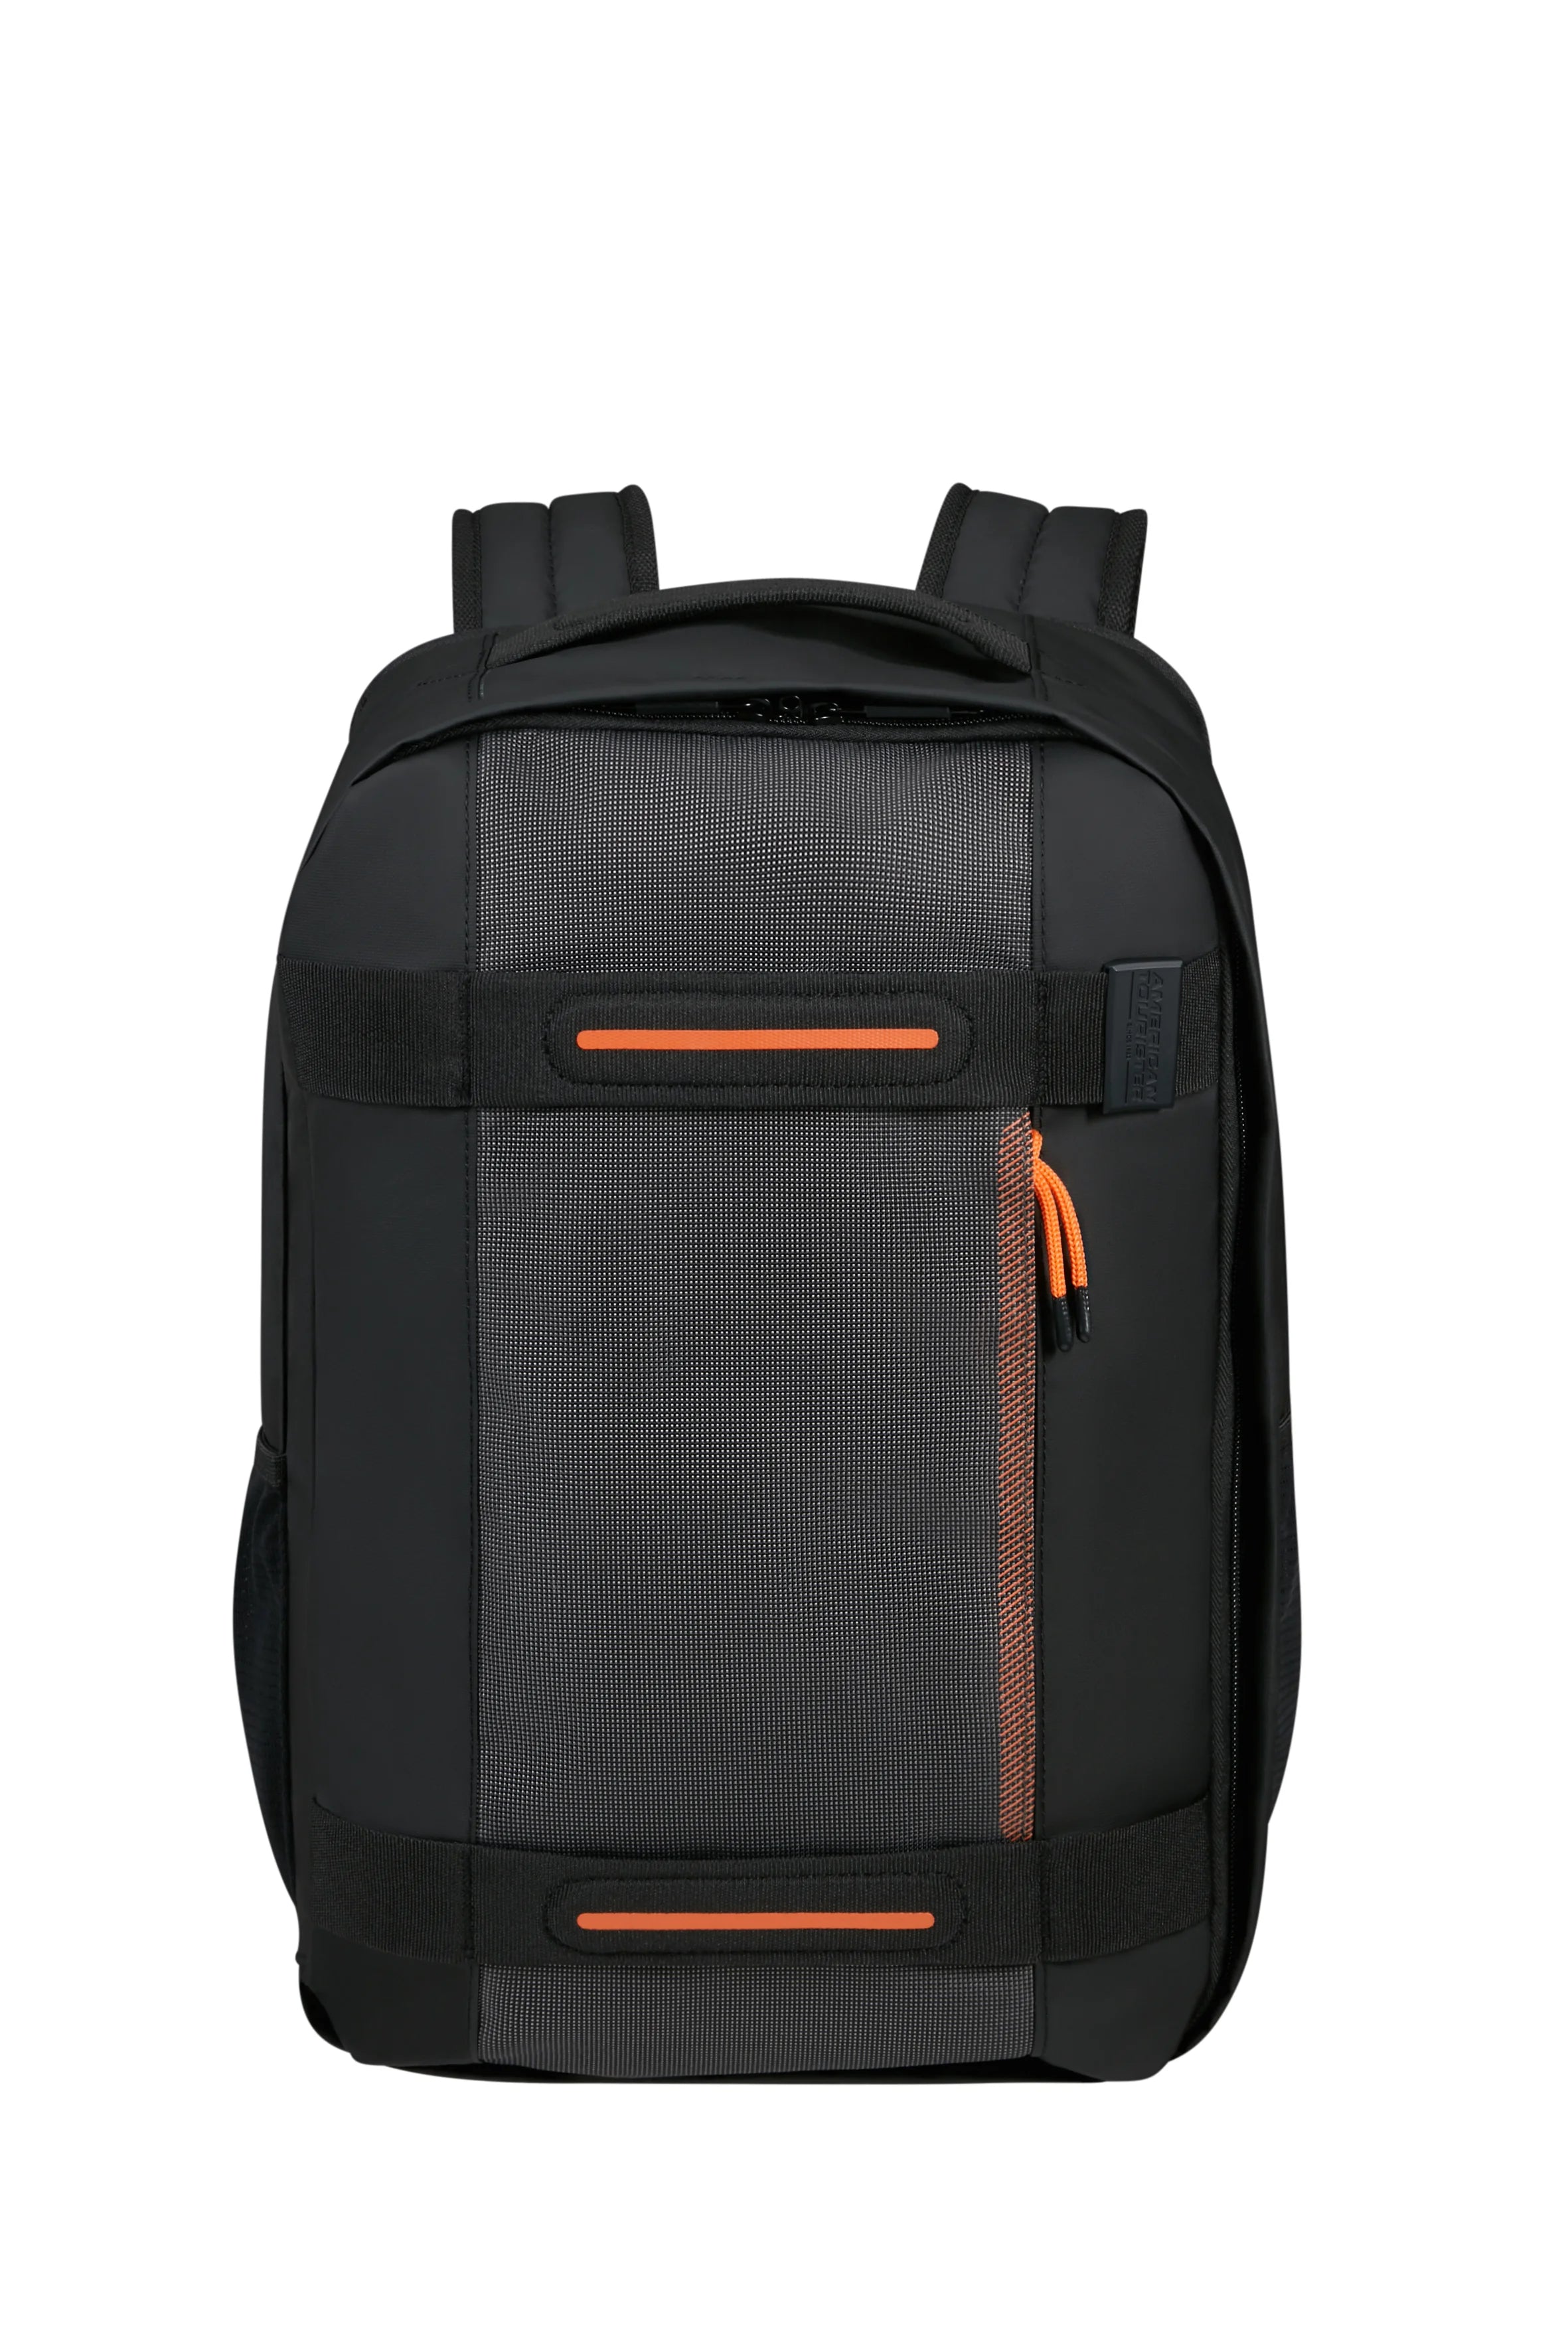 American Tourister plecak kabinowy do laptopa 14'' Urban Track Black/Orange